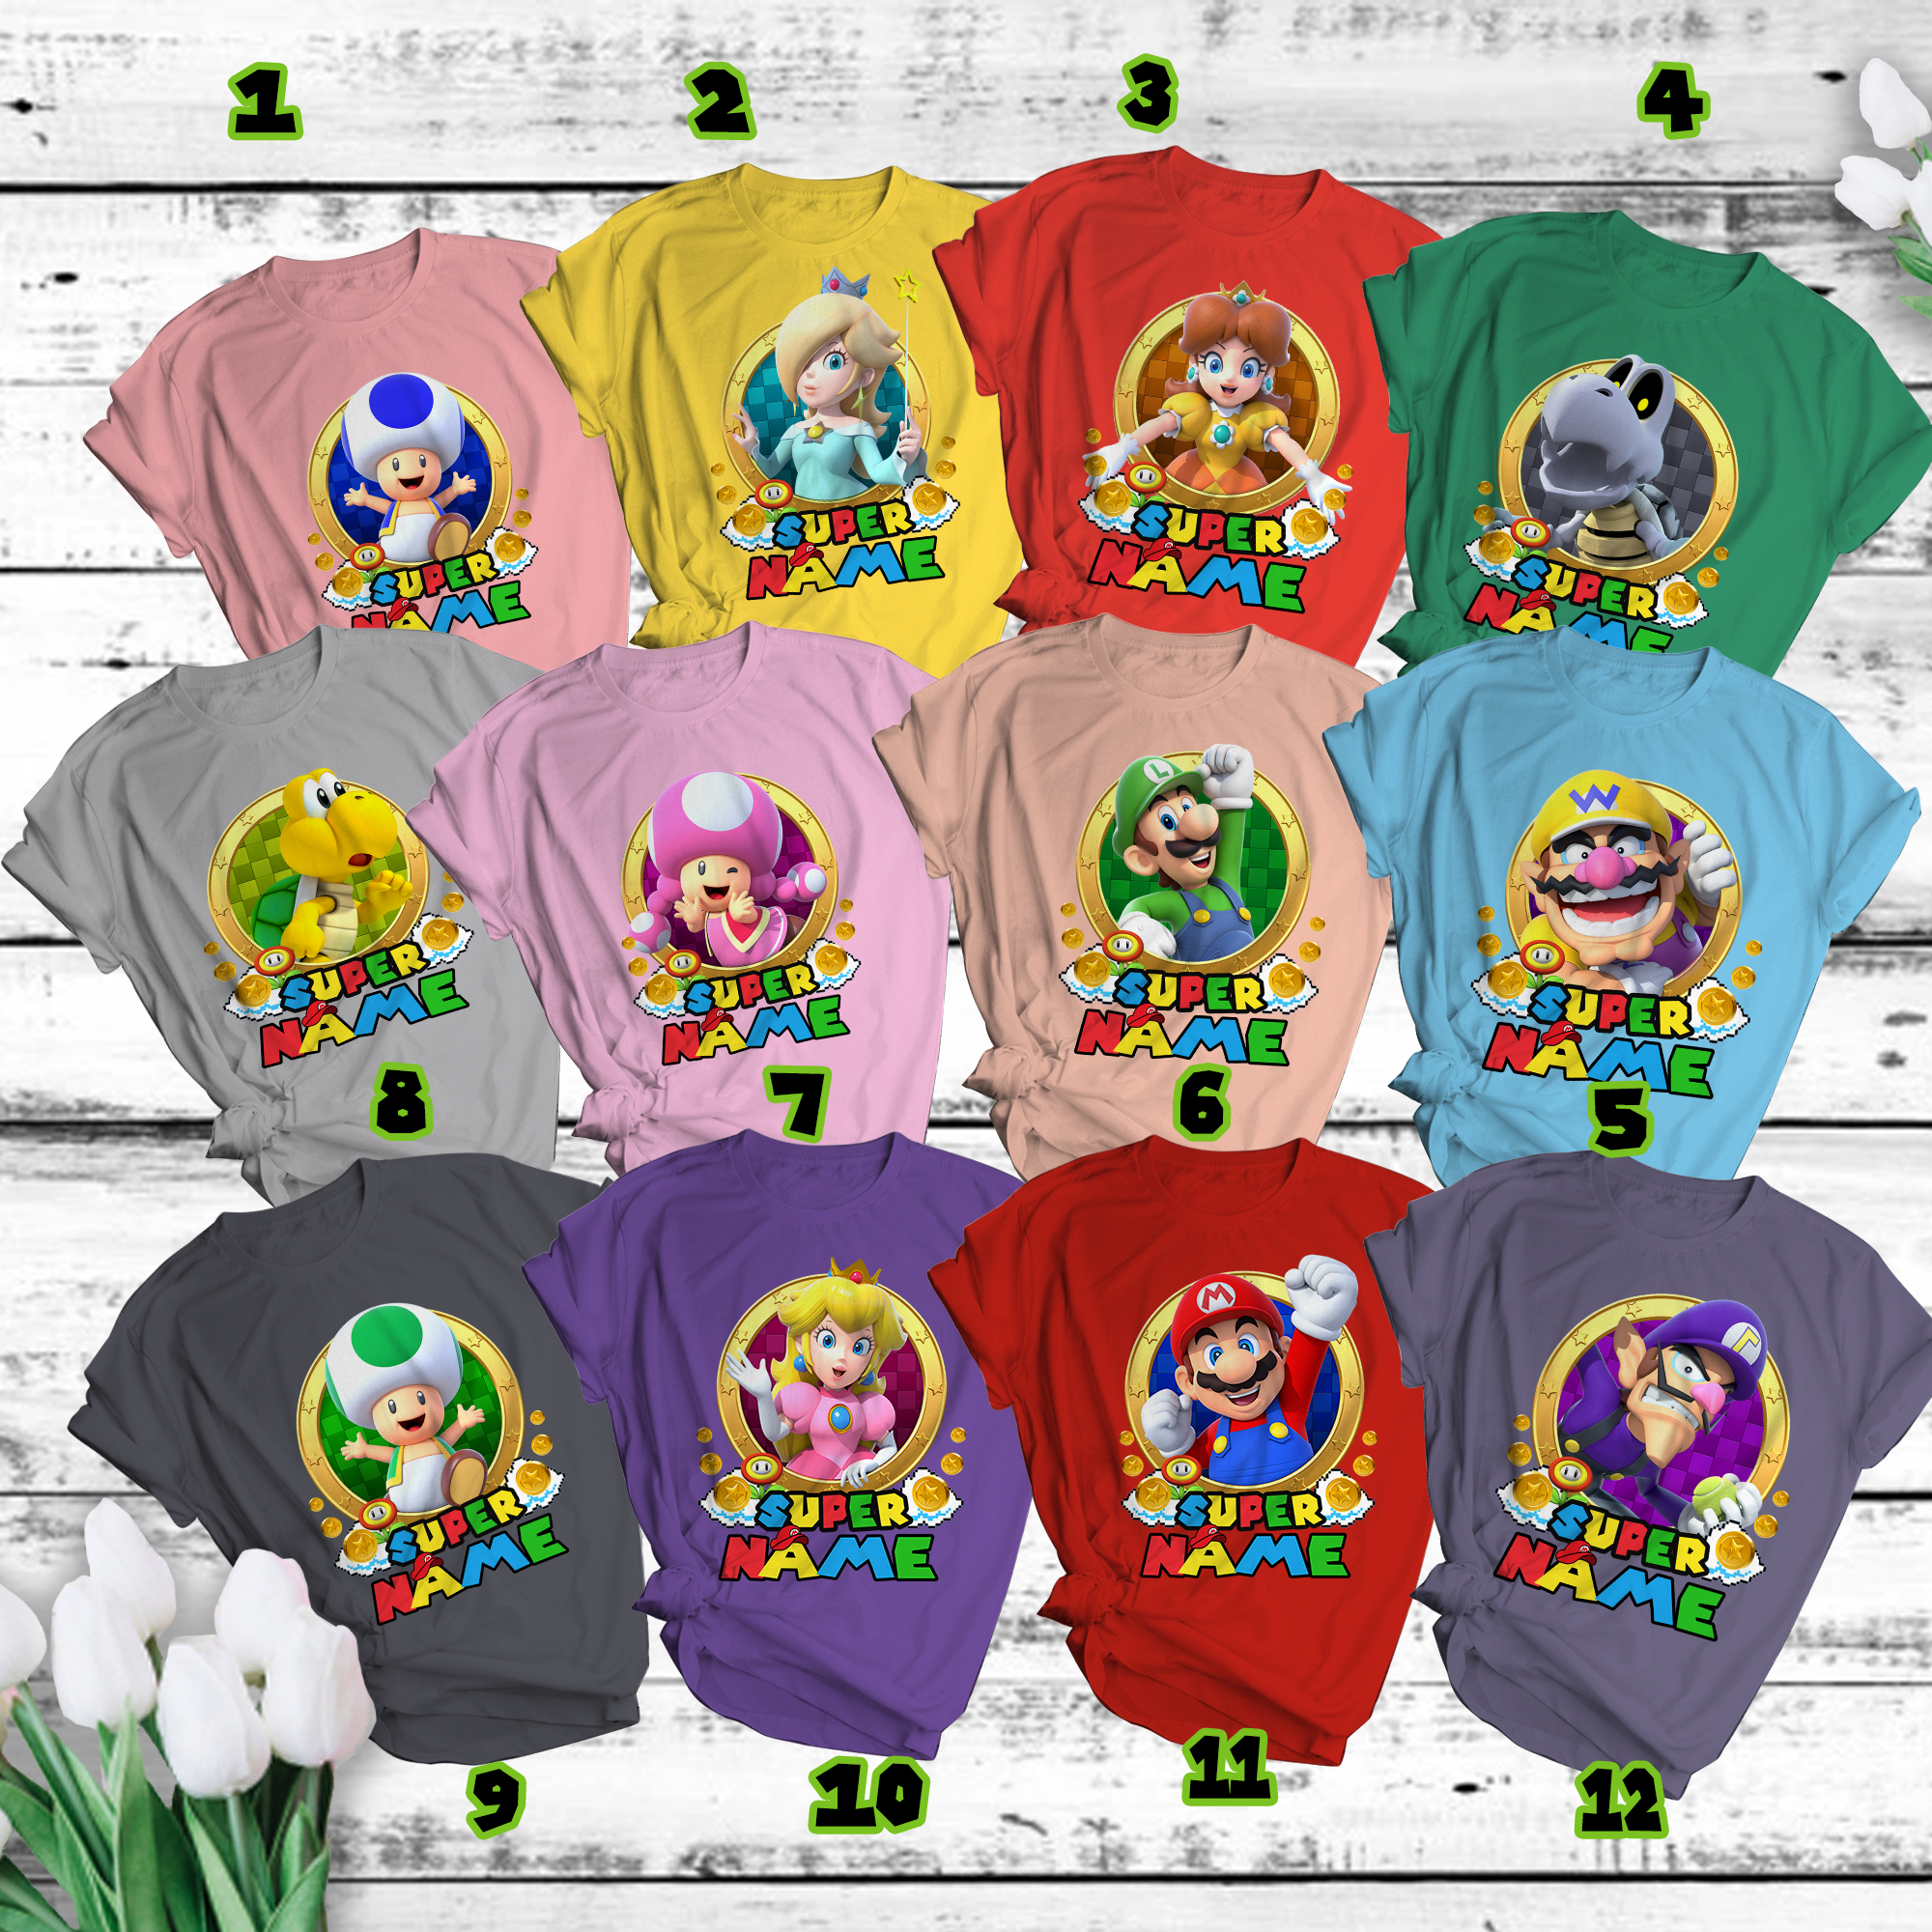 Super Mario Shirt, Super Mario Birthday Shirt, Super Mario Family Shirt, Super Mario Characters Shirt, Mario & Friend Party Matching Tee